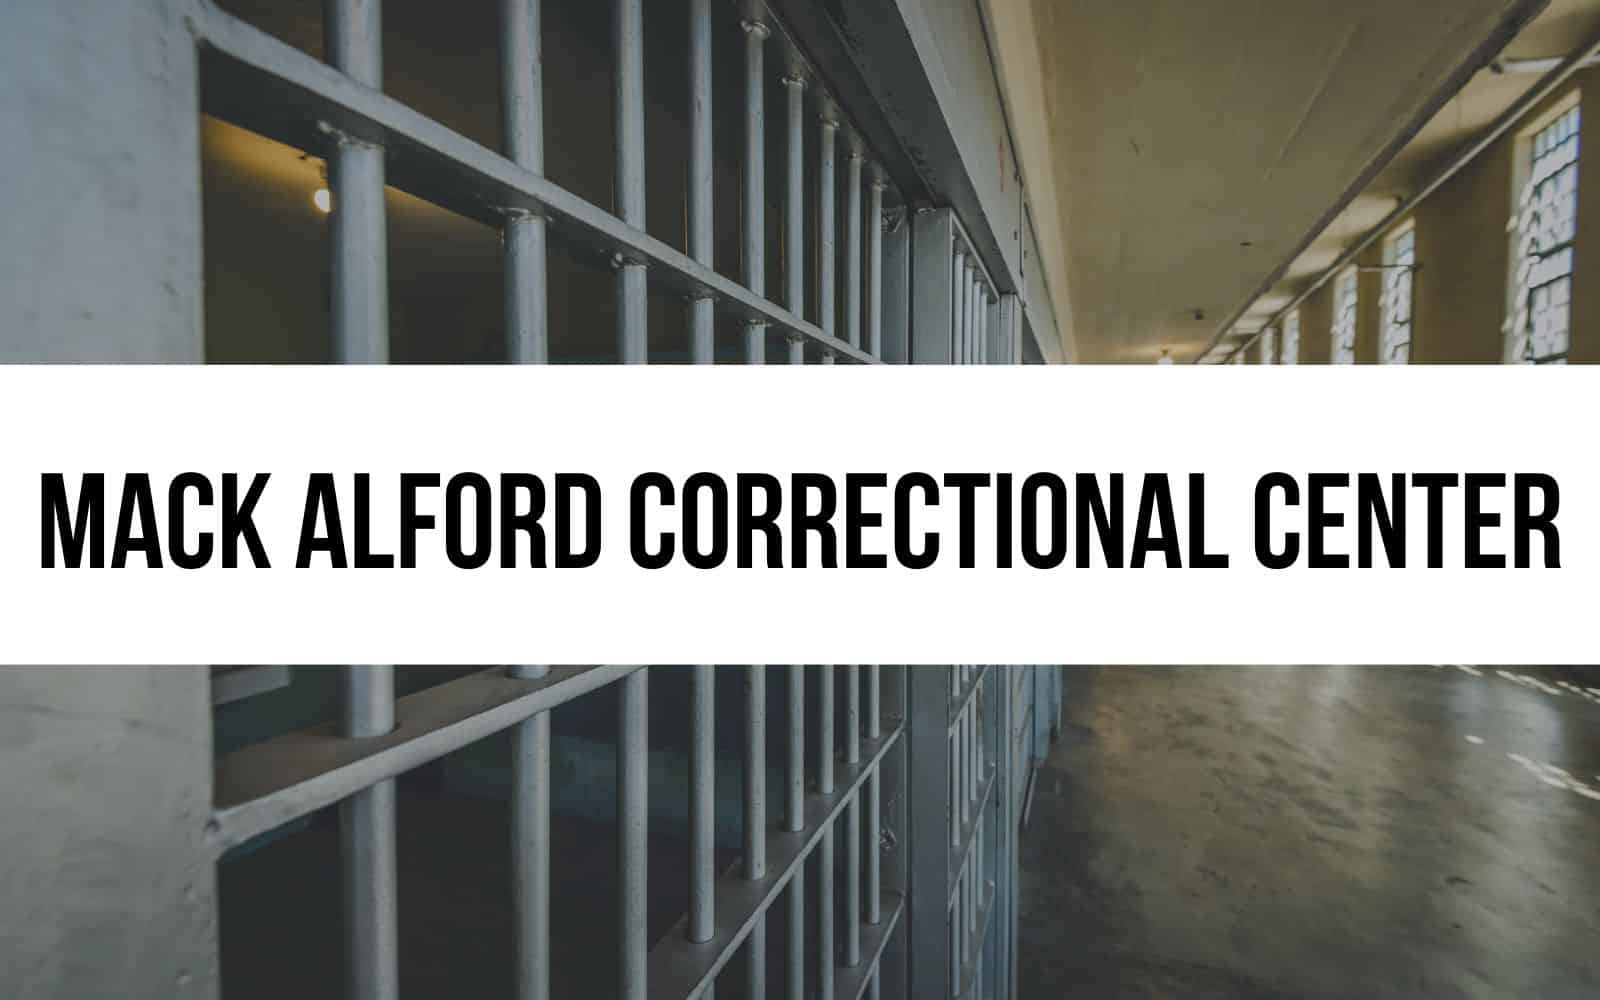 Mack Alford Correctional Center